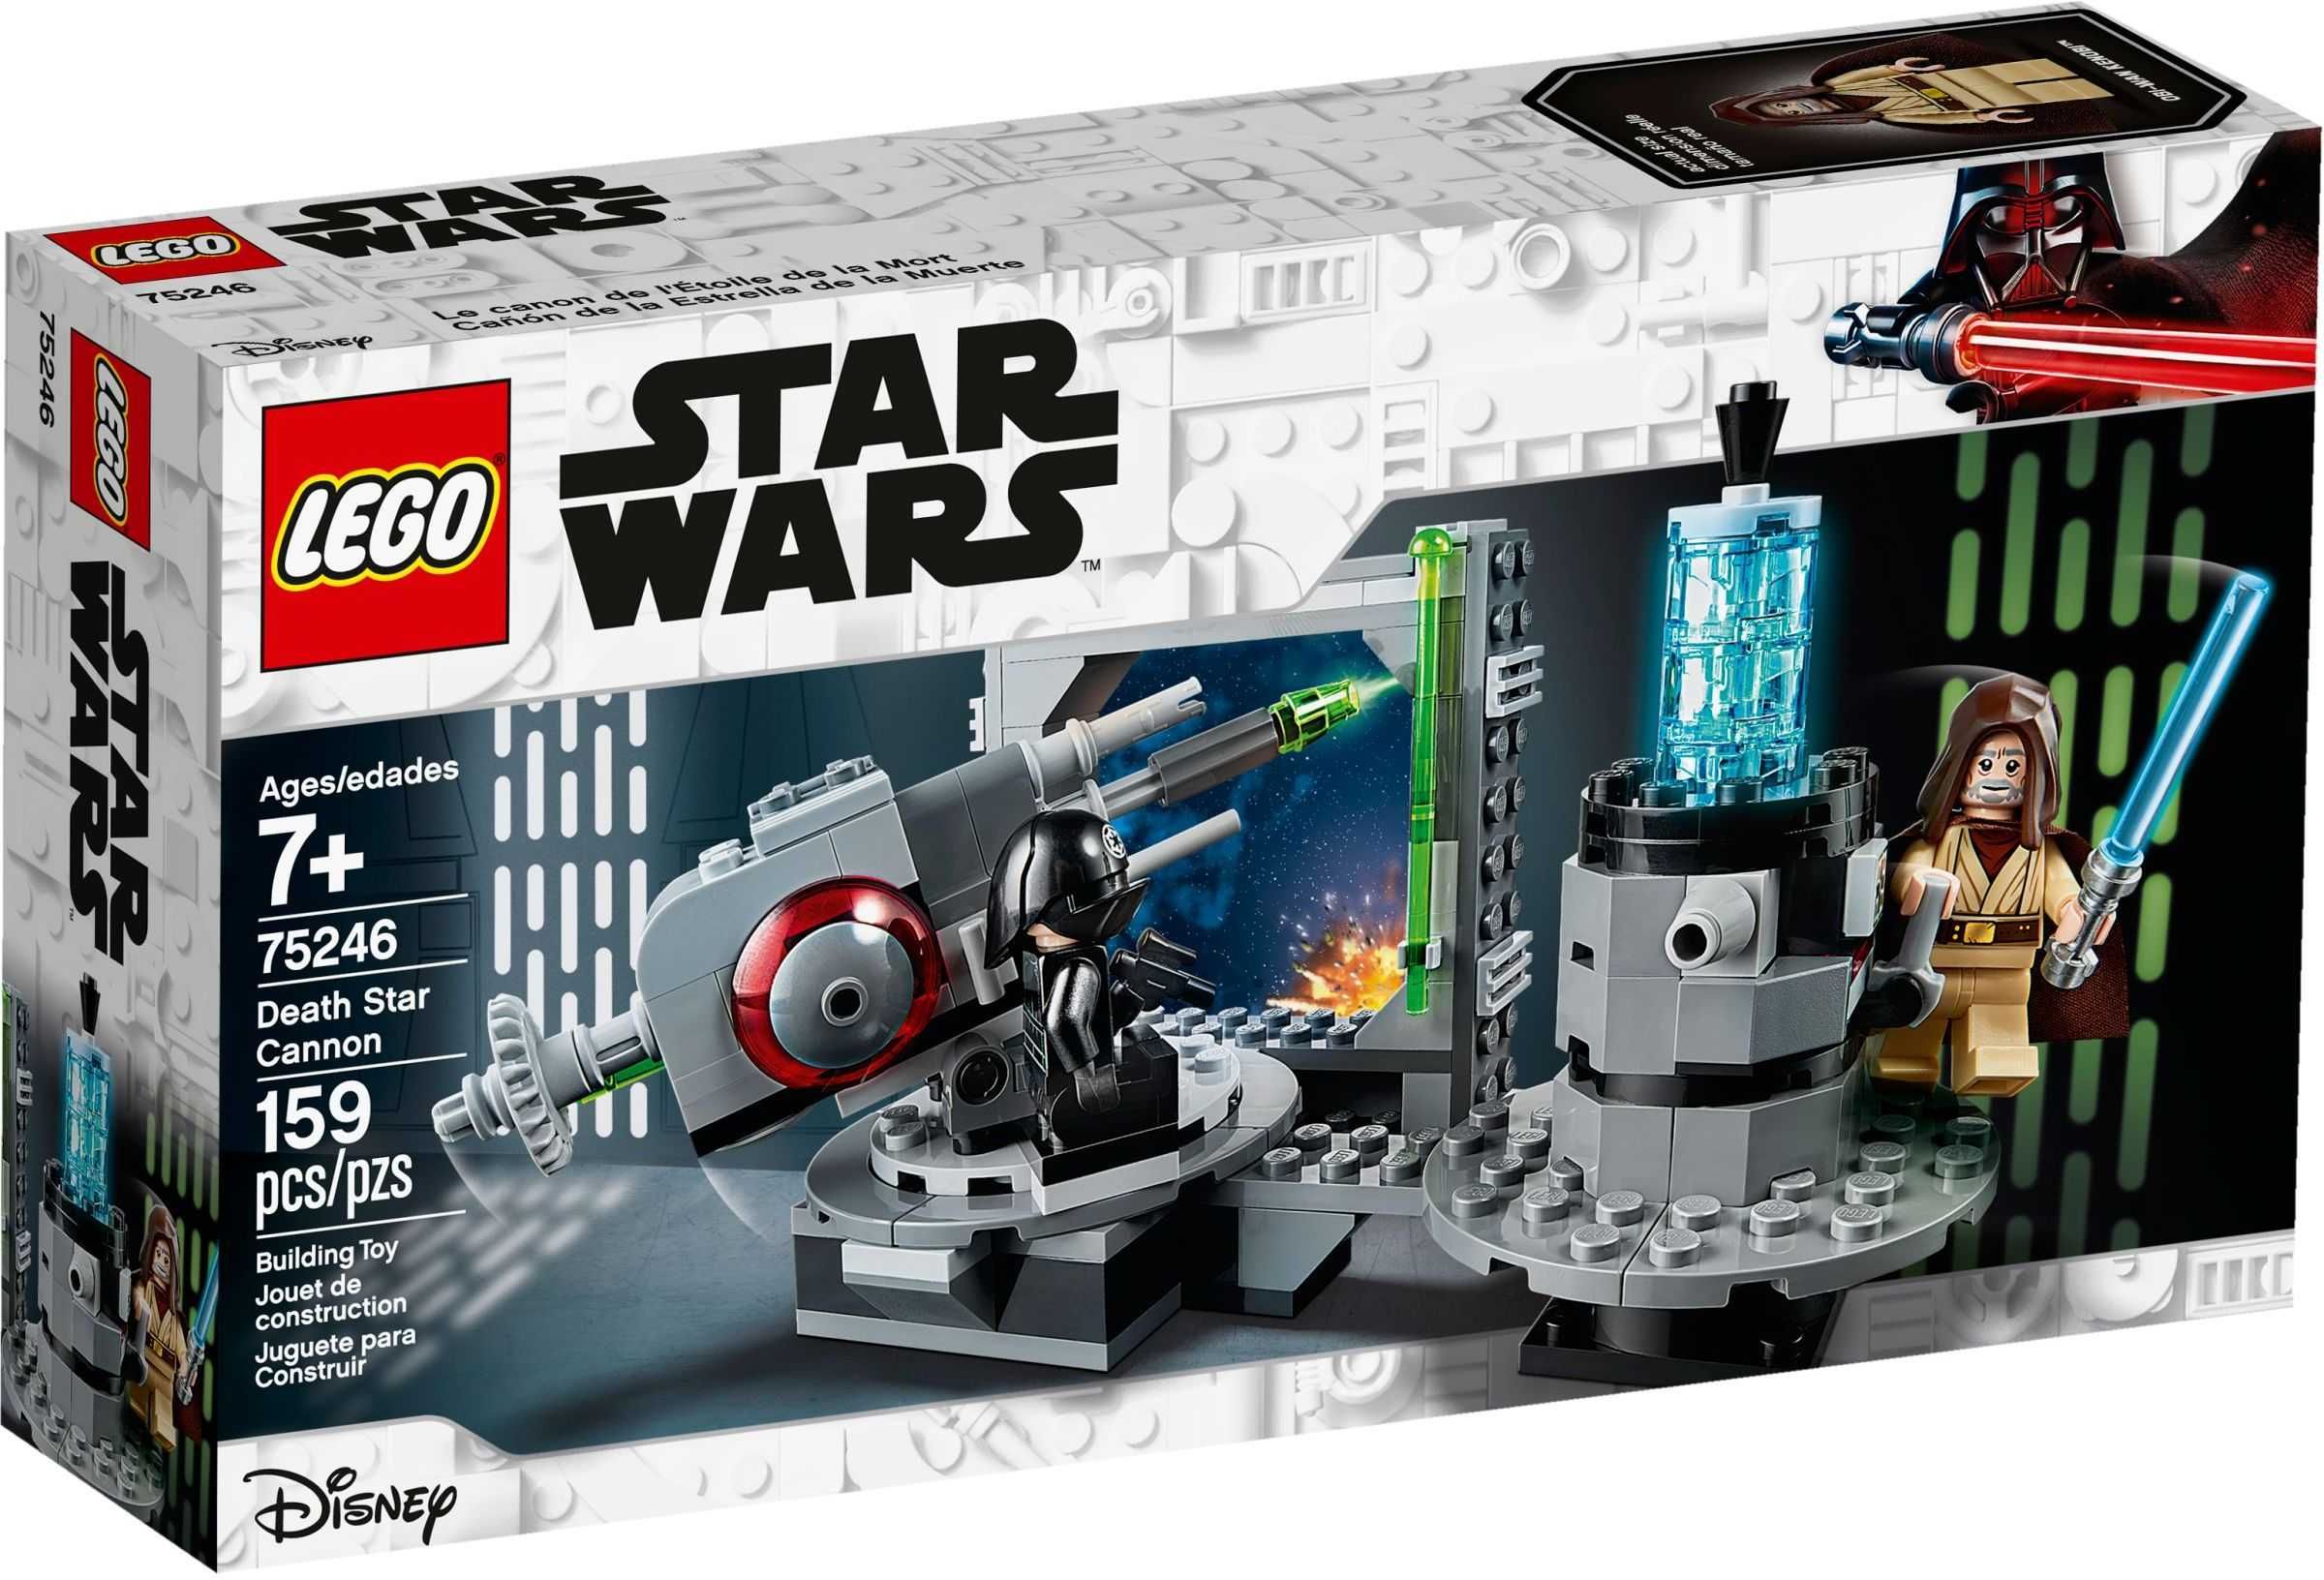 LEGO Star Wars - Tunul Death Star 75246 - Obi Wan Kenobi Diorama